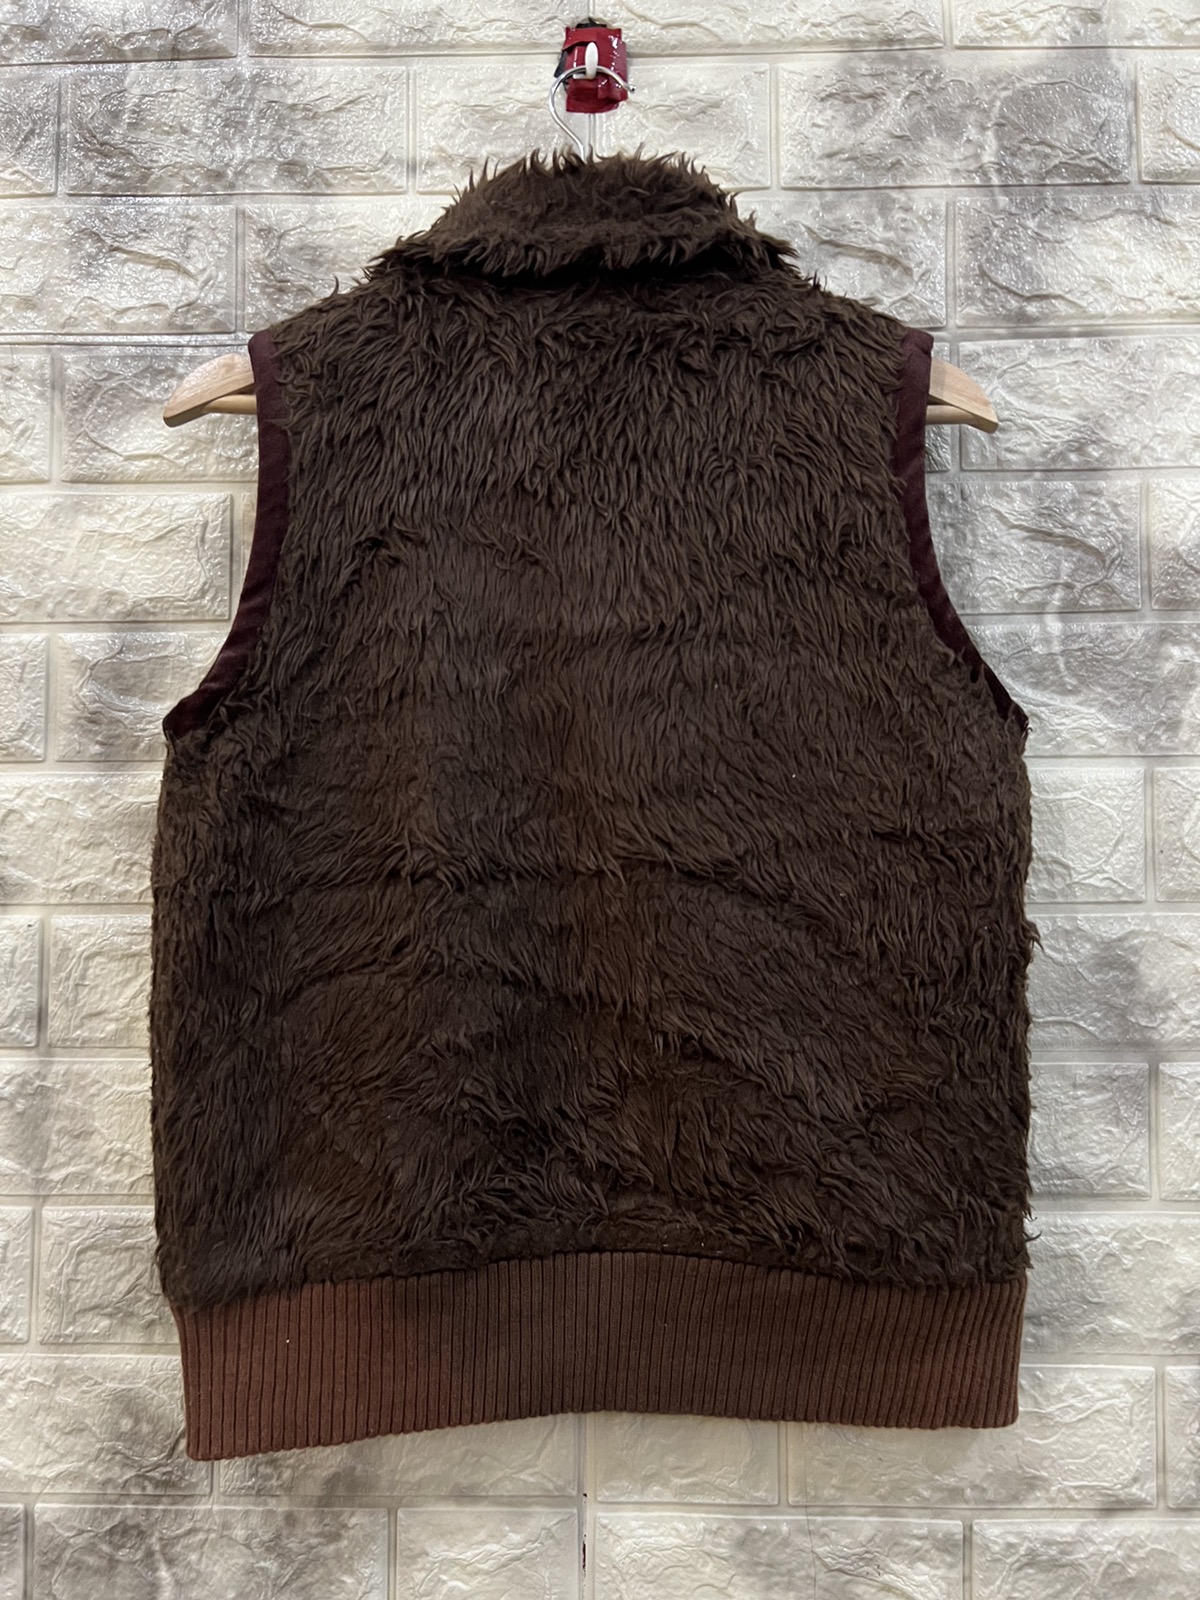 The North Face Cookie Fur Vest - 10